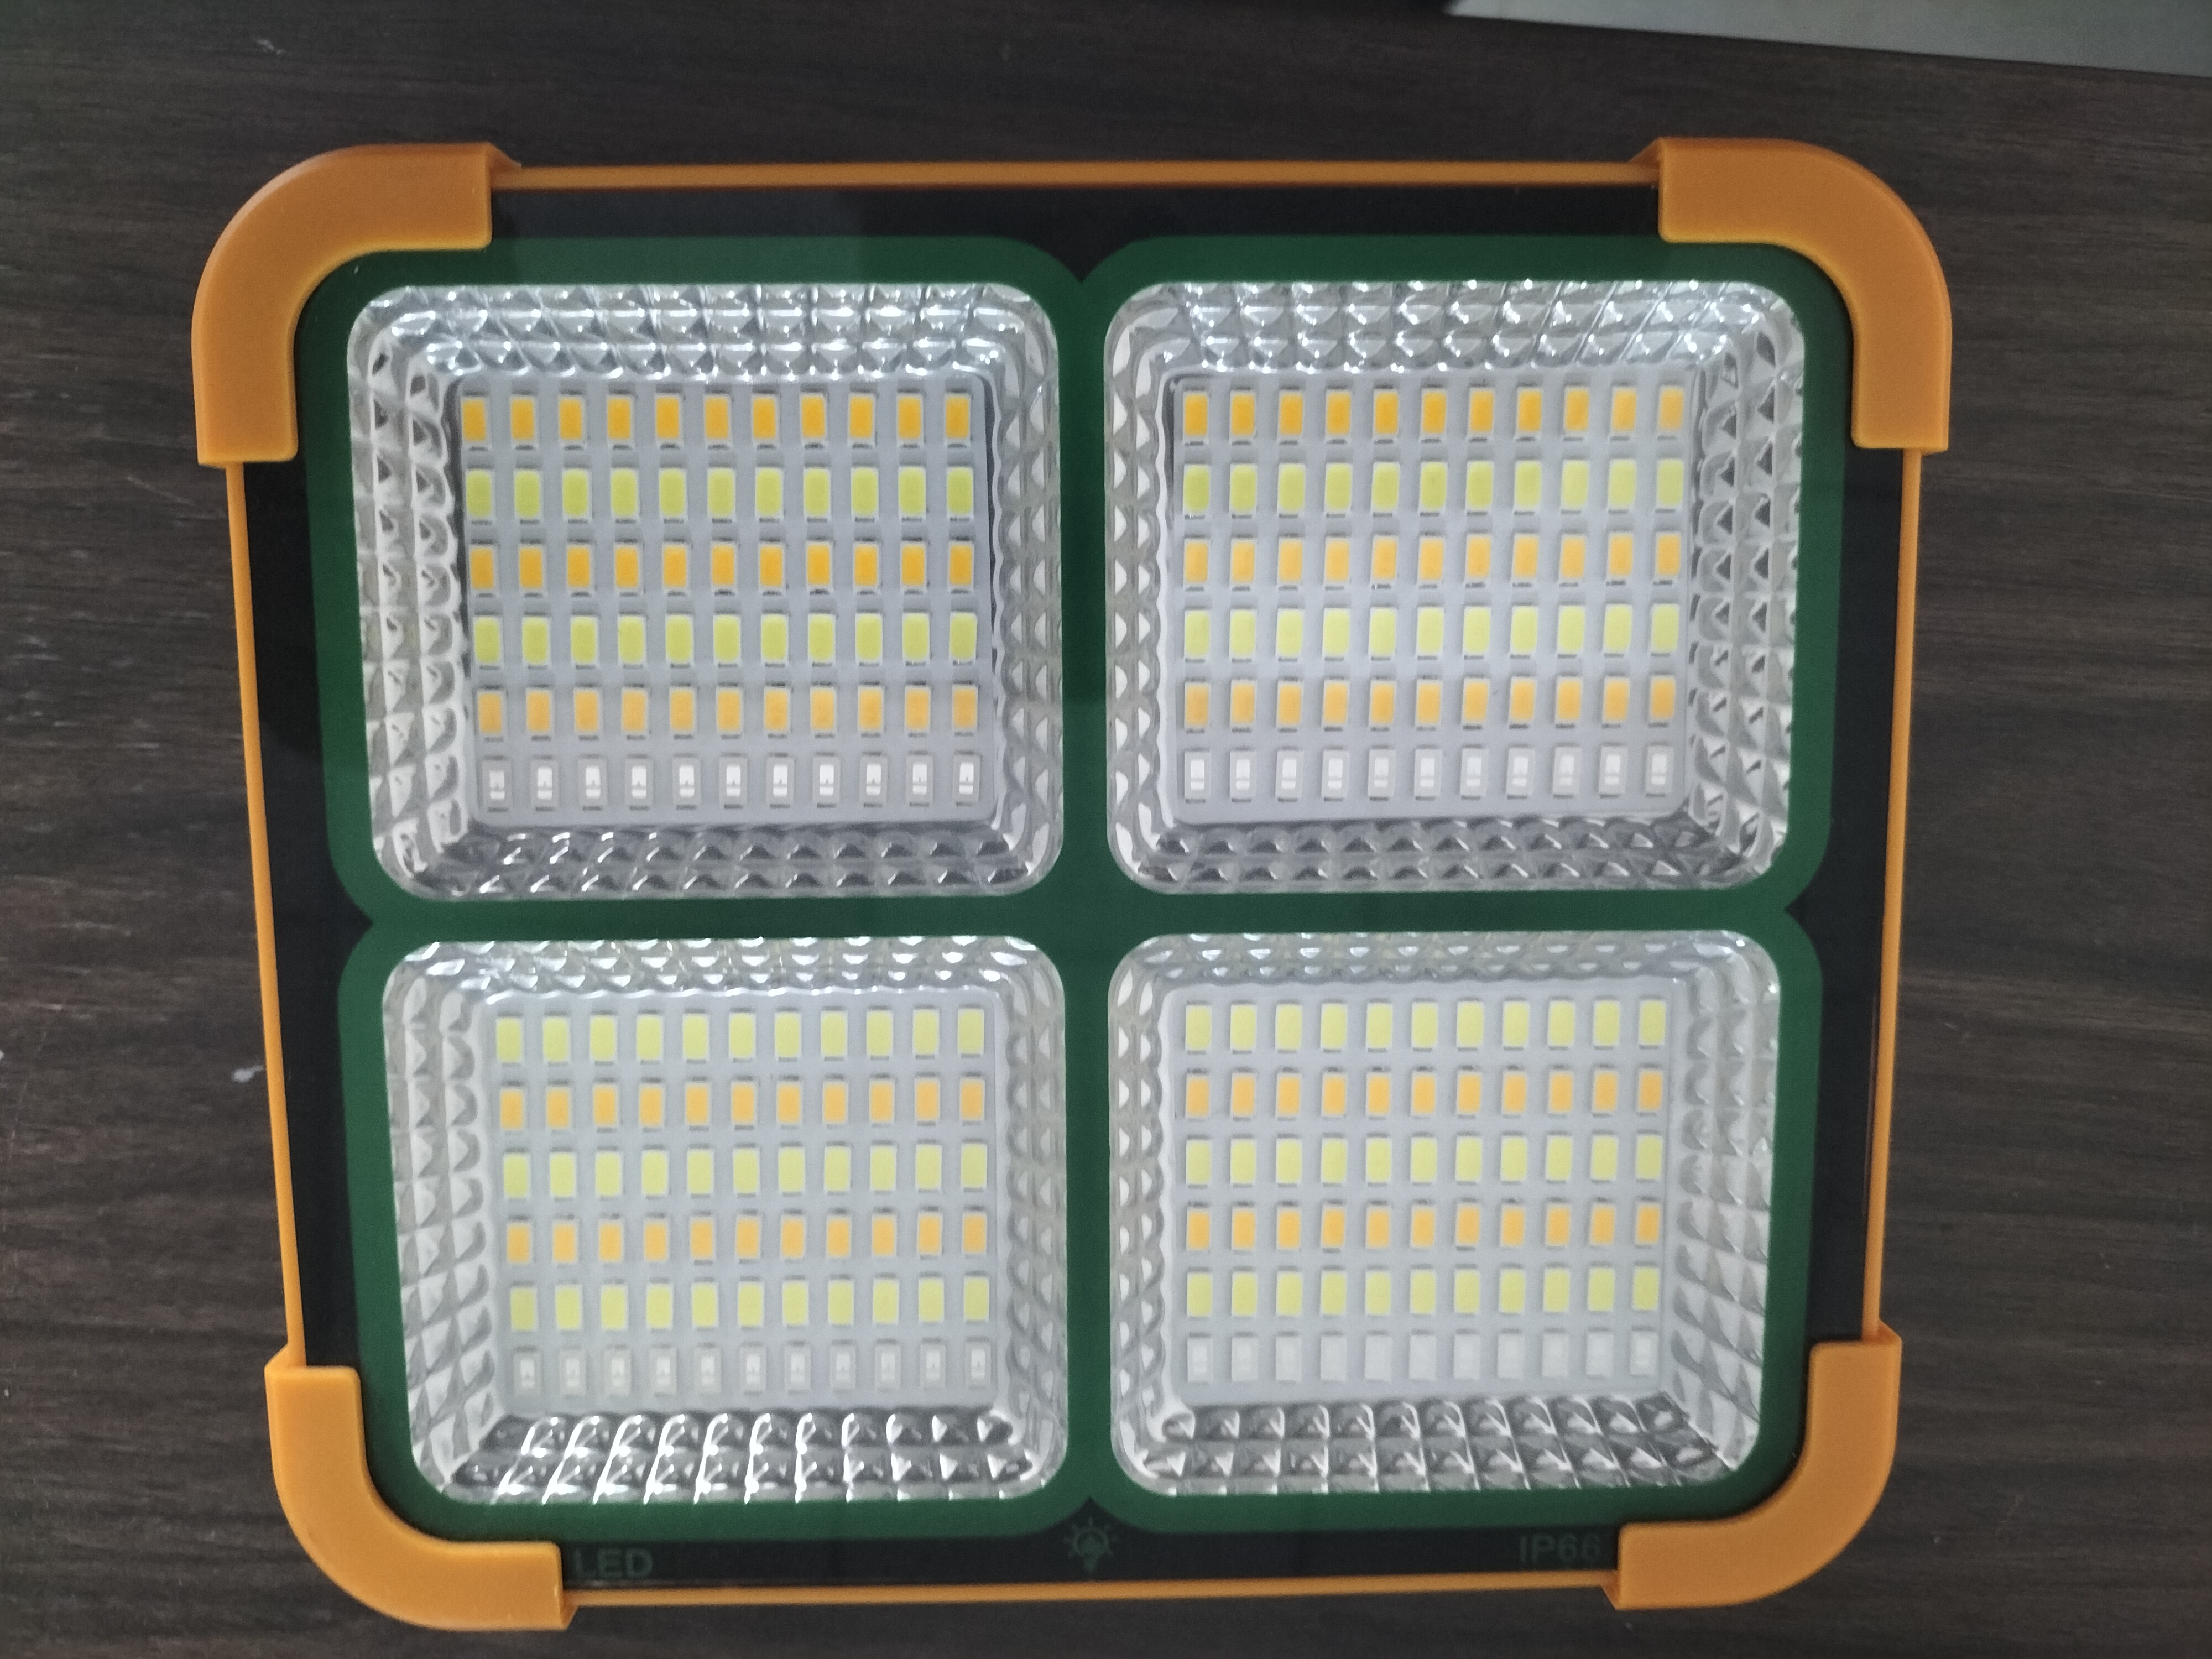 New Portable 100W Rechargeable 6000mAh Solar Panel Multifunctional Solar LED Wall Lights Adjustable Solar Wall Light